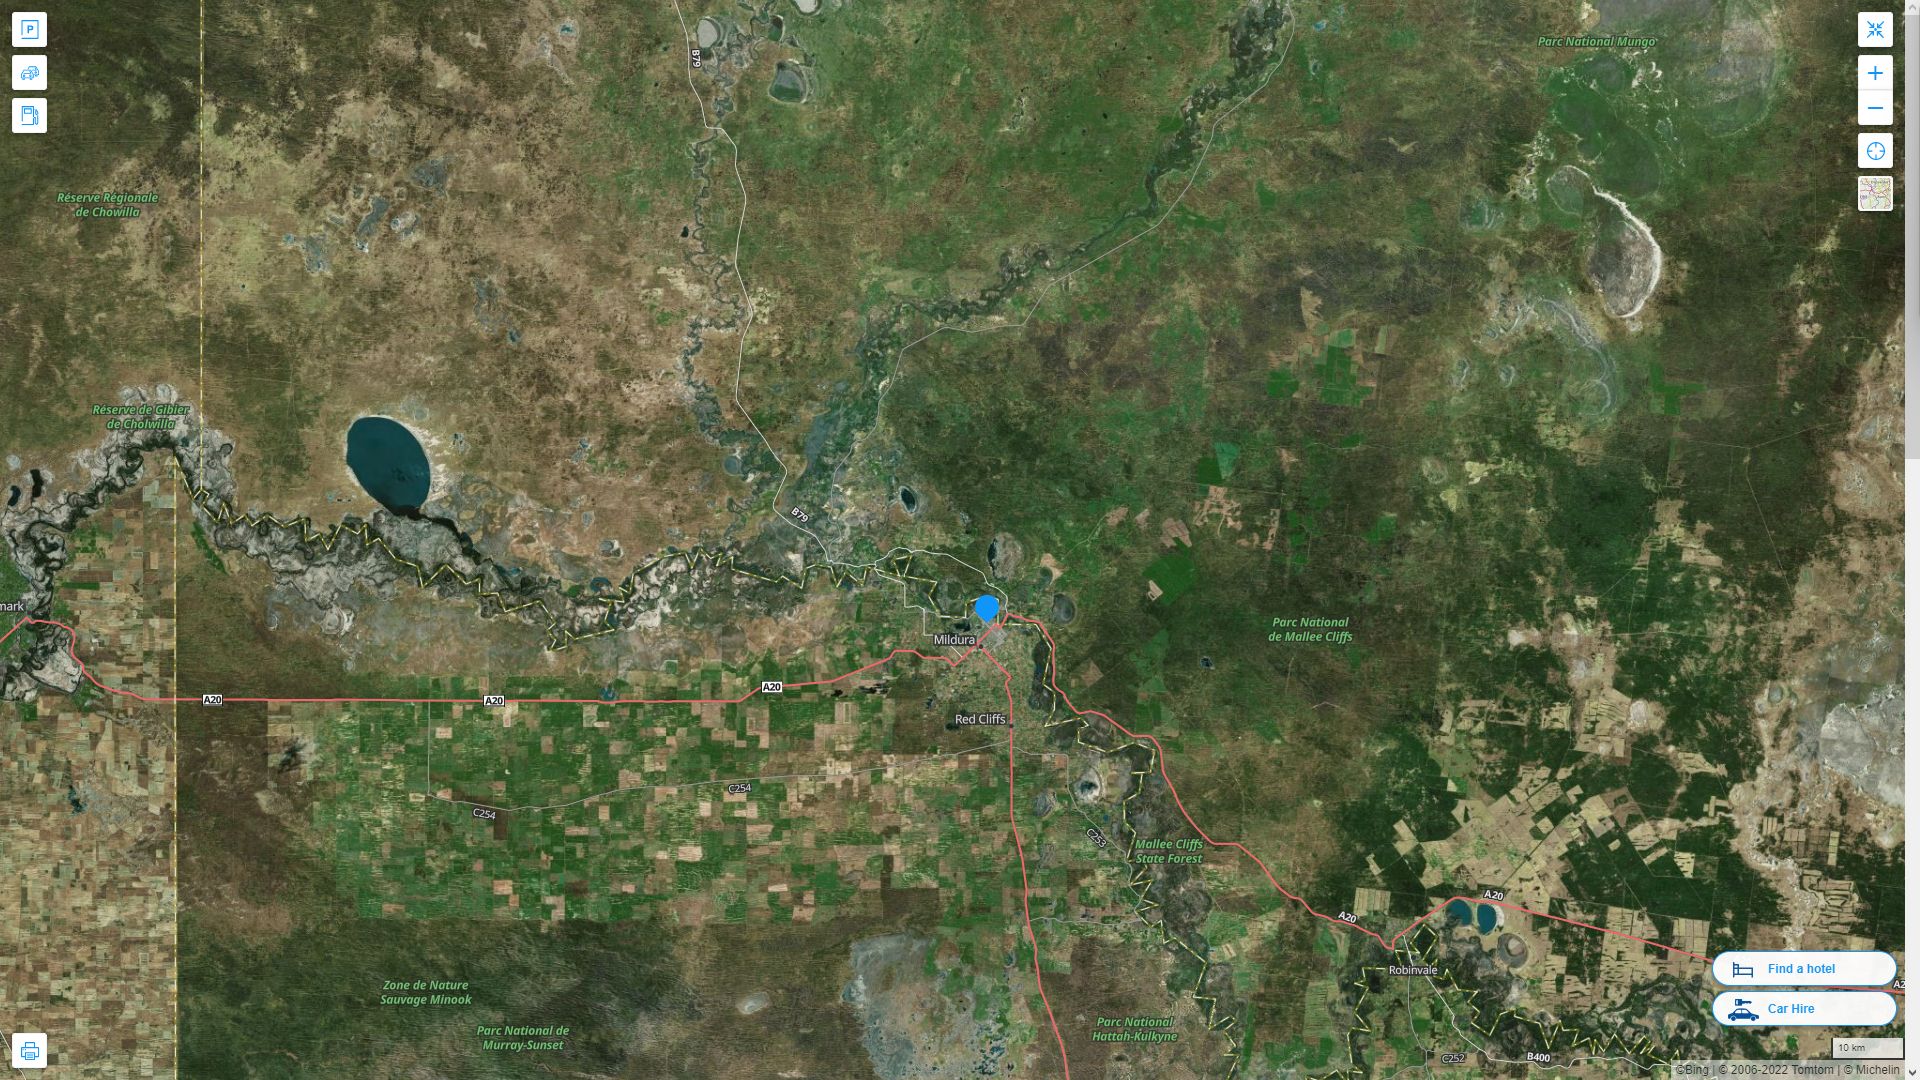 Mildura Highway and Road Map with Satellite View